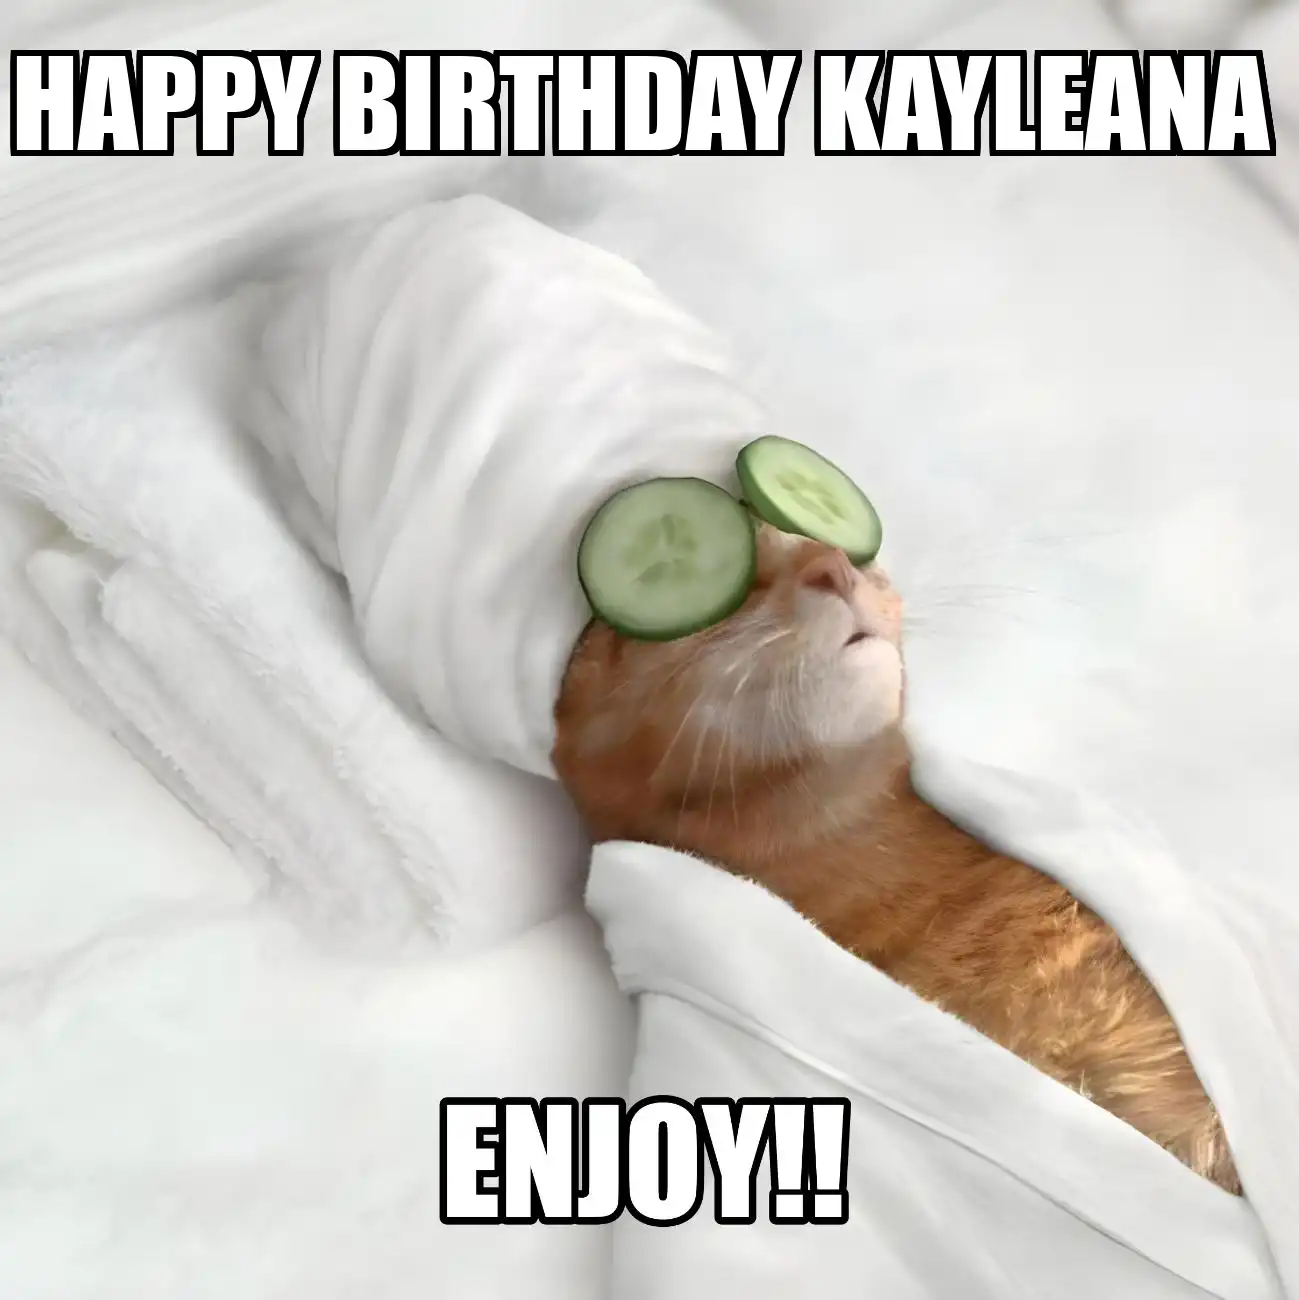 Happy Birthday Kayleana Enjoy Cat Meme